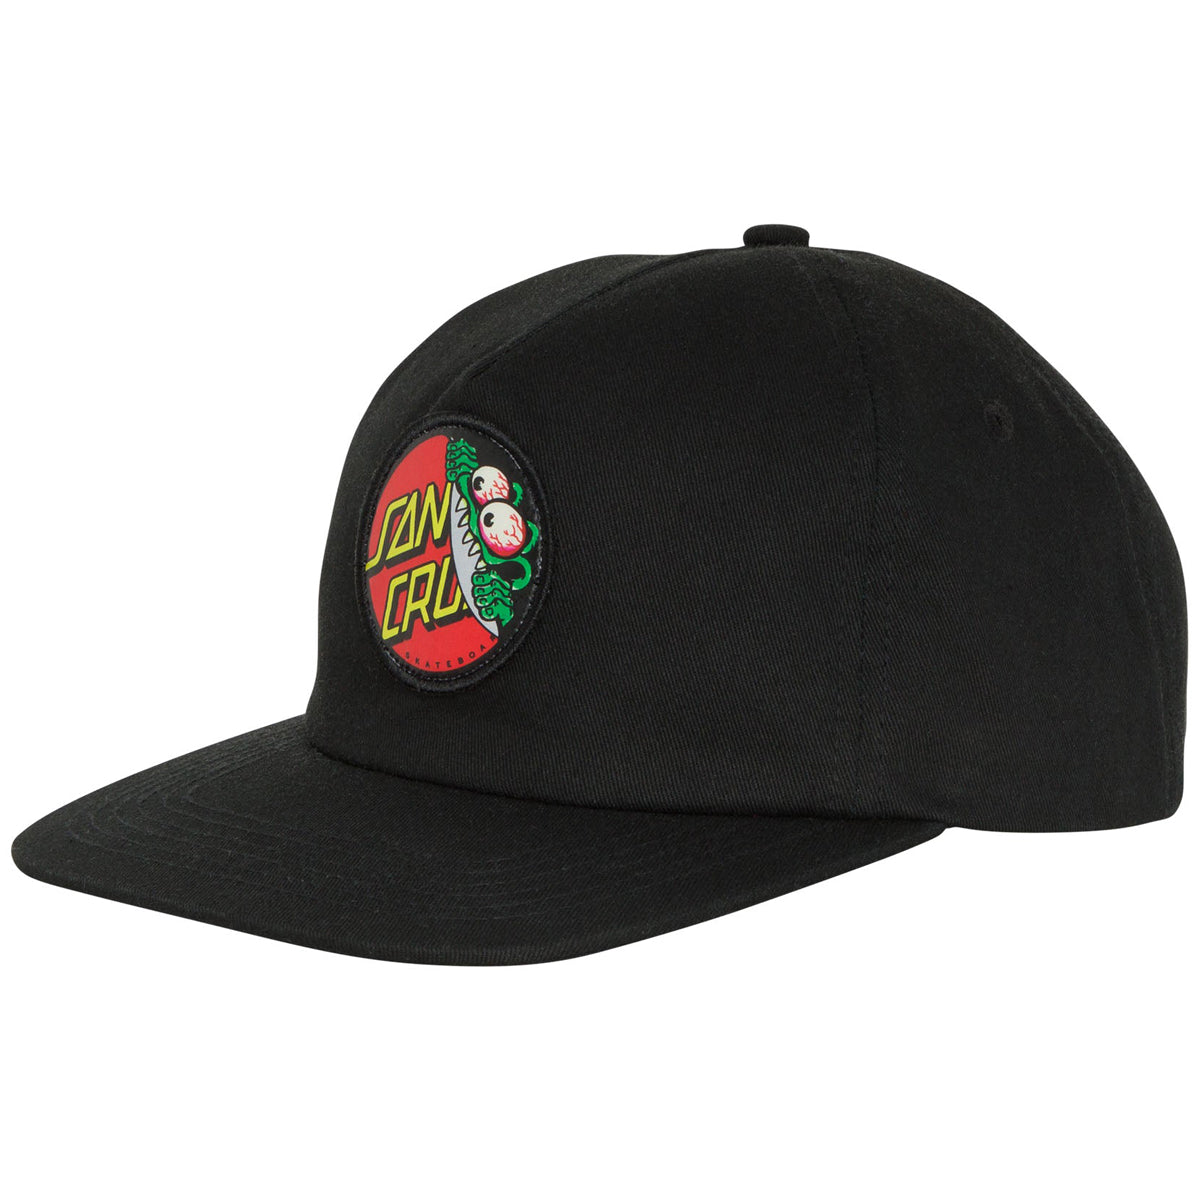 Santa Cruz Beware Dot Strapback Hat - Black image 1